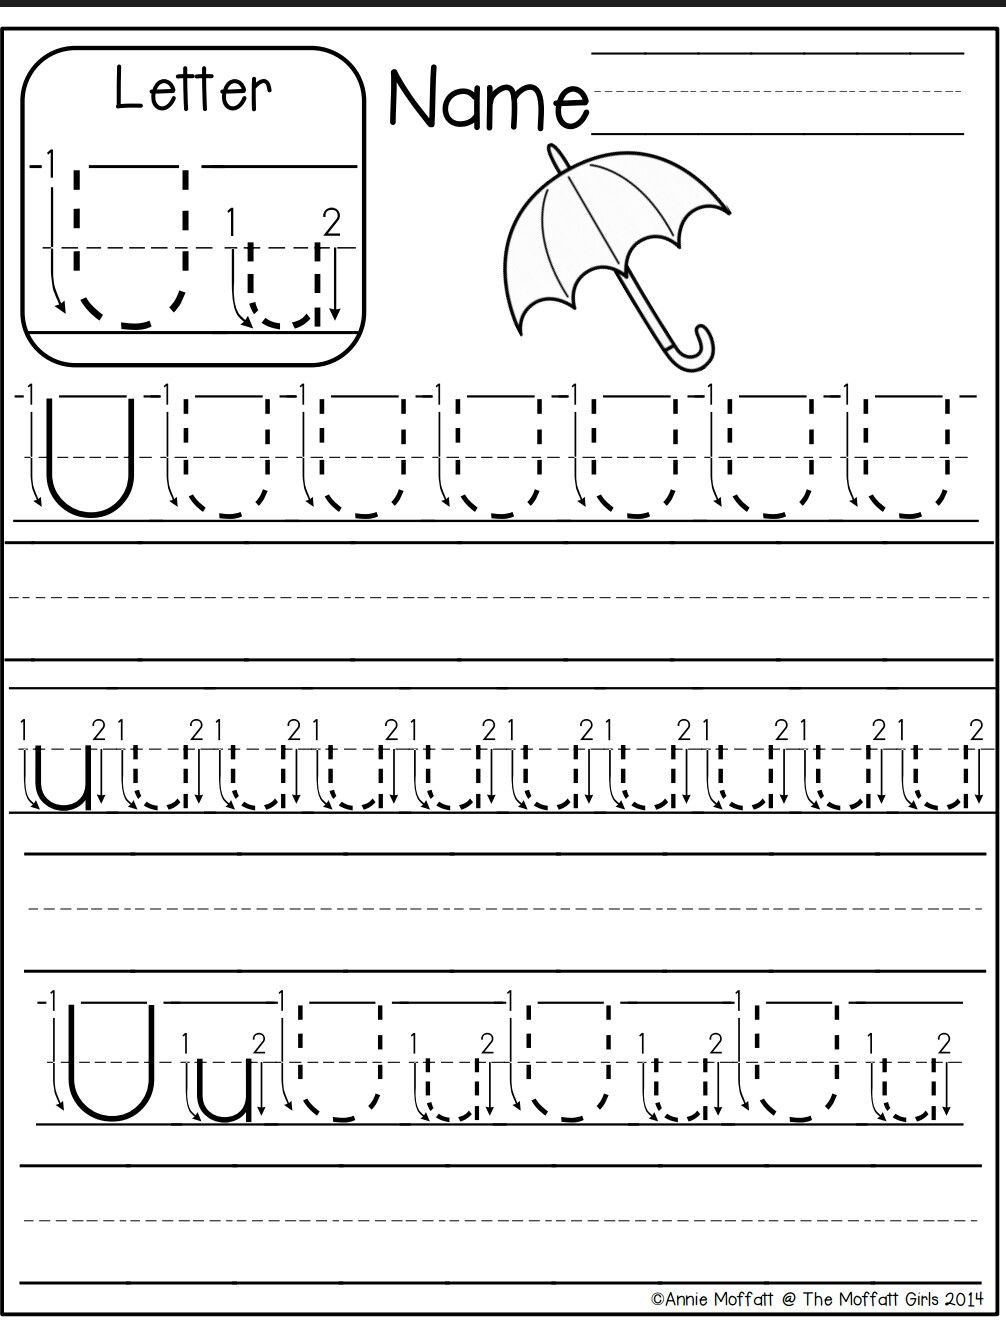 Letter U Worksheet | Kindergarten Worksheets Printable pertaining to Letter U Tracing And Writing